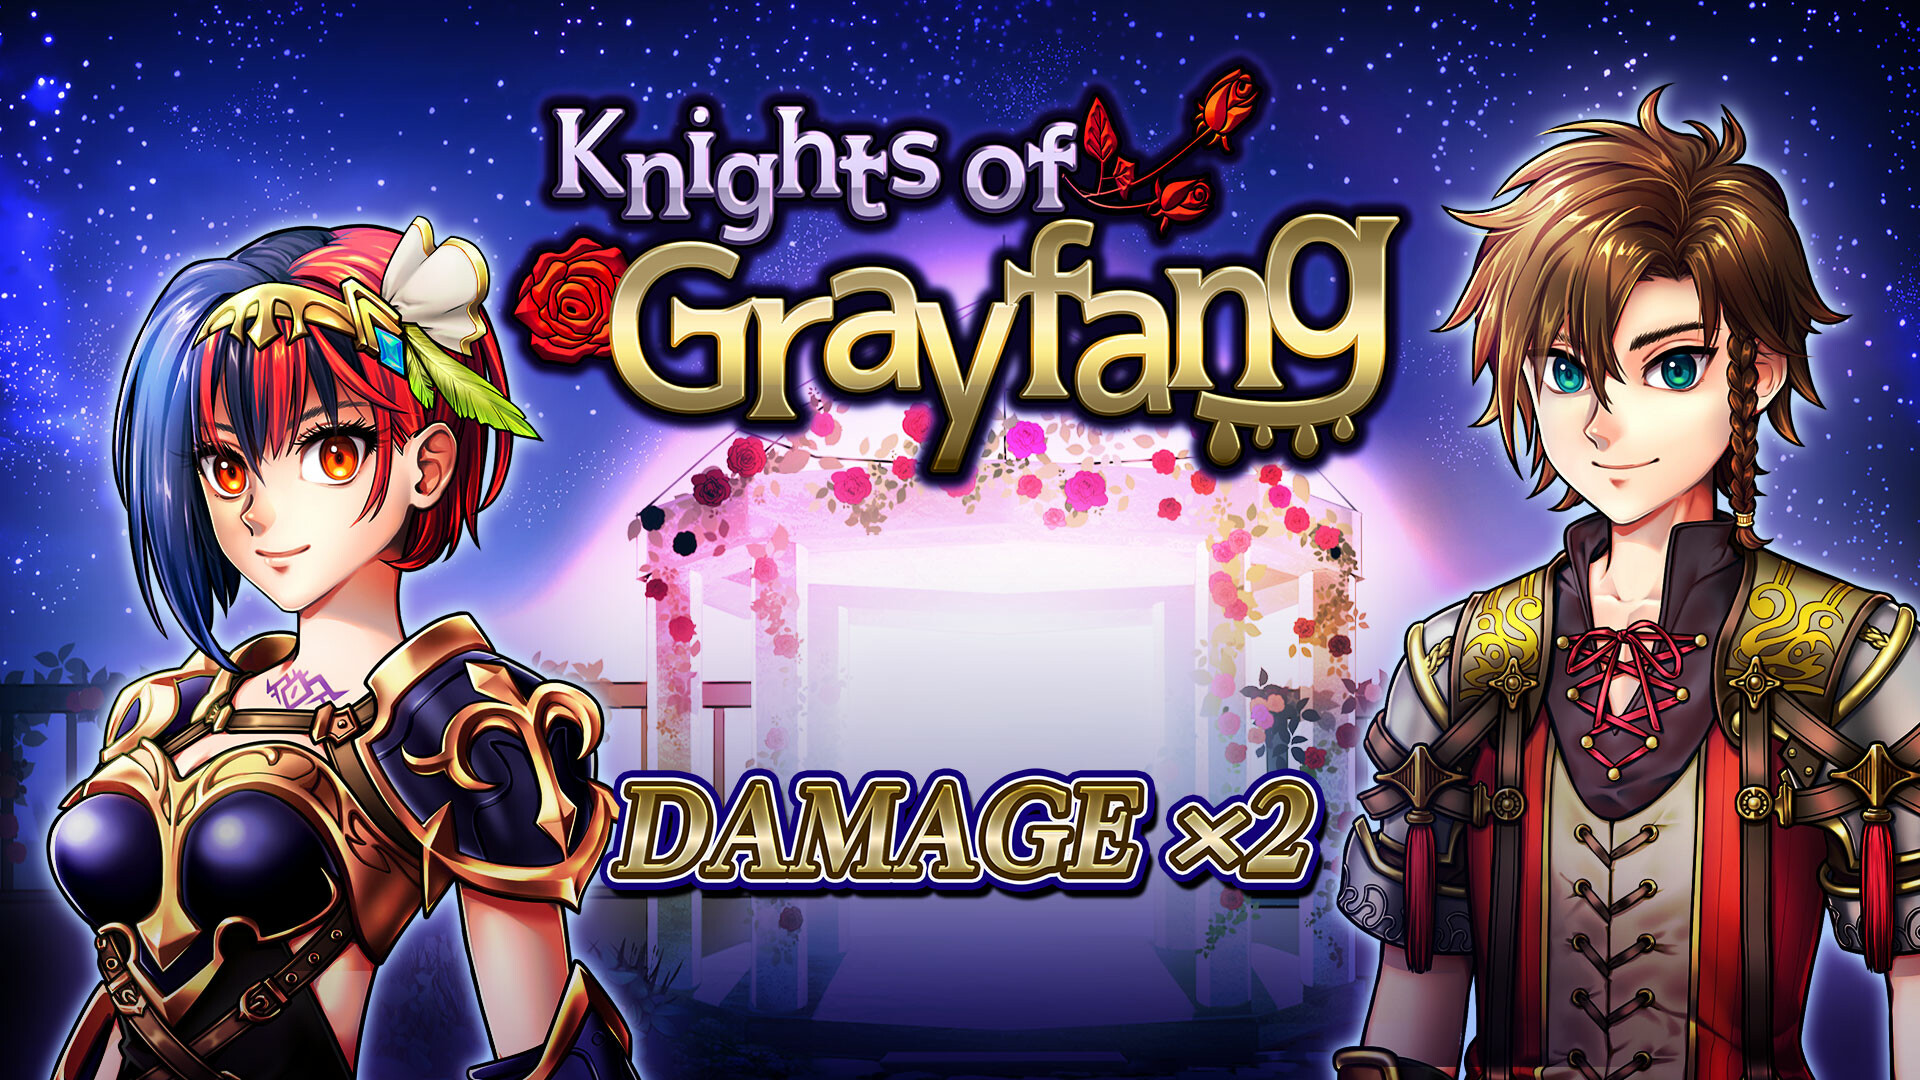 Damage x2 - Knights of Grayfang Featured Screenshot #1